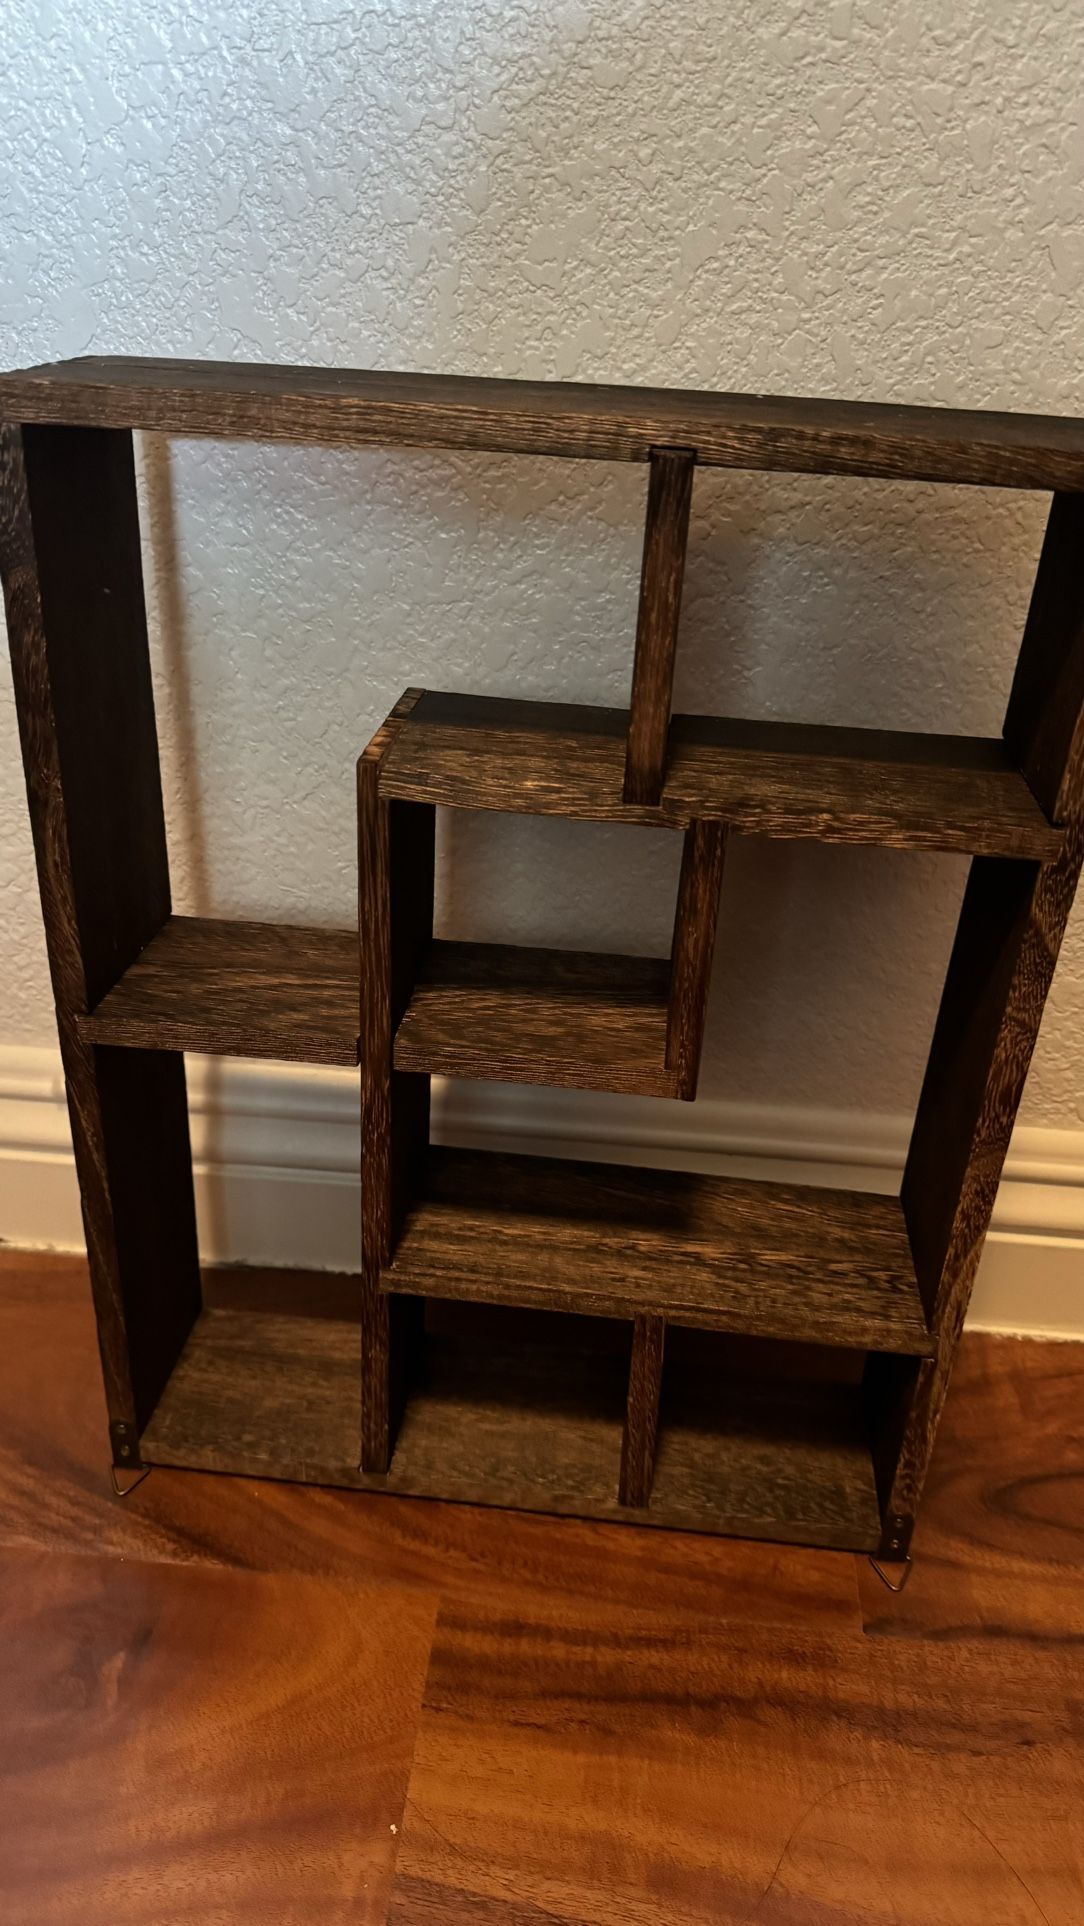 Small Shelf For Little Trinkets